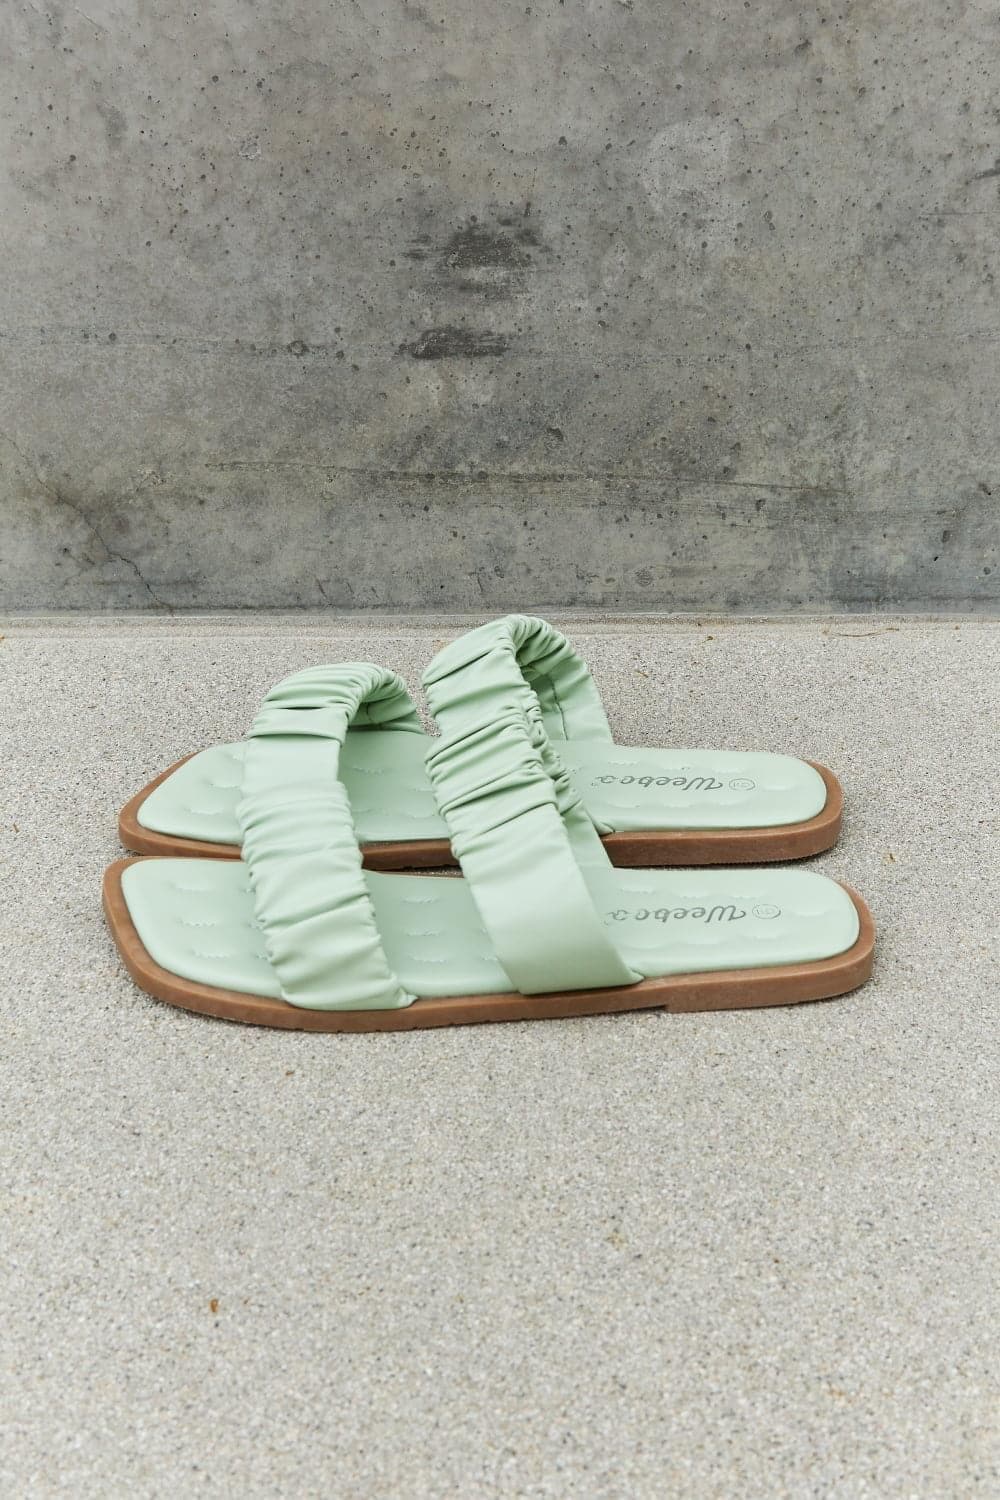 Weeboo Double Strap Scrunch Sandal in Gum Leaf - SwagglyLife Home & Fashion